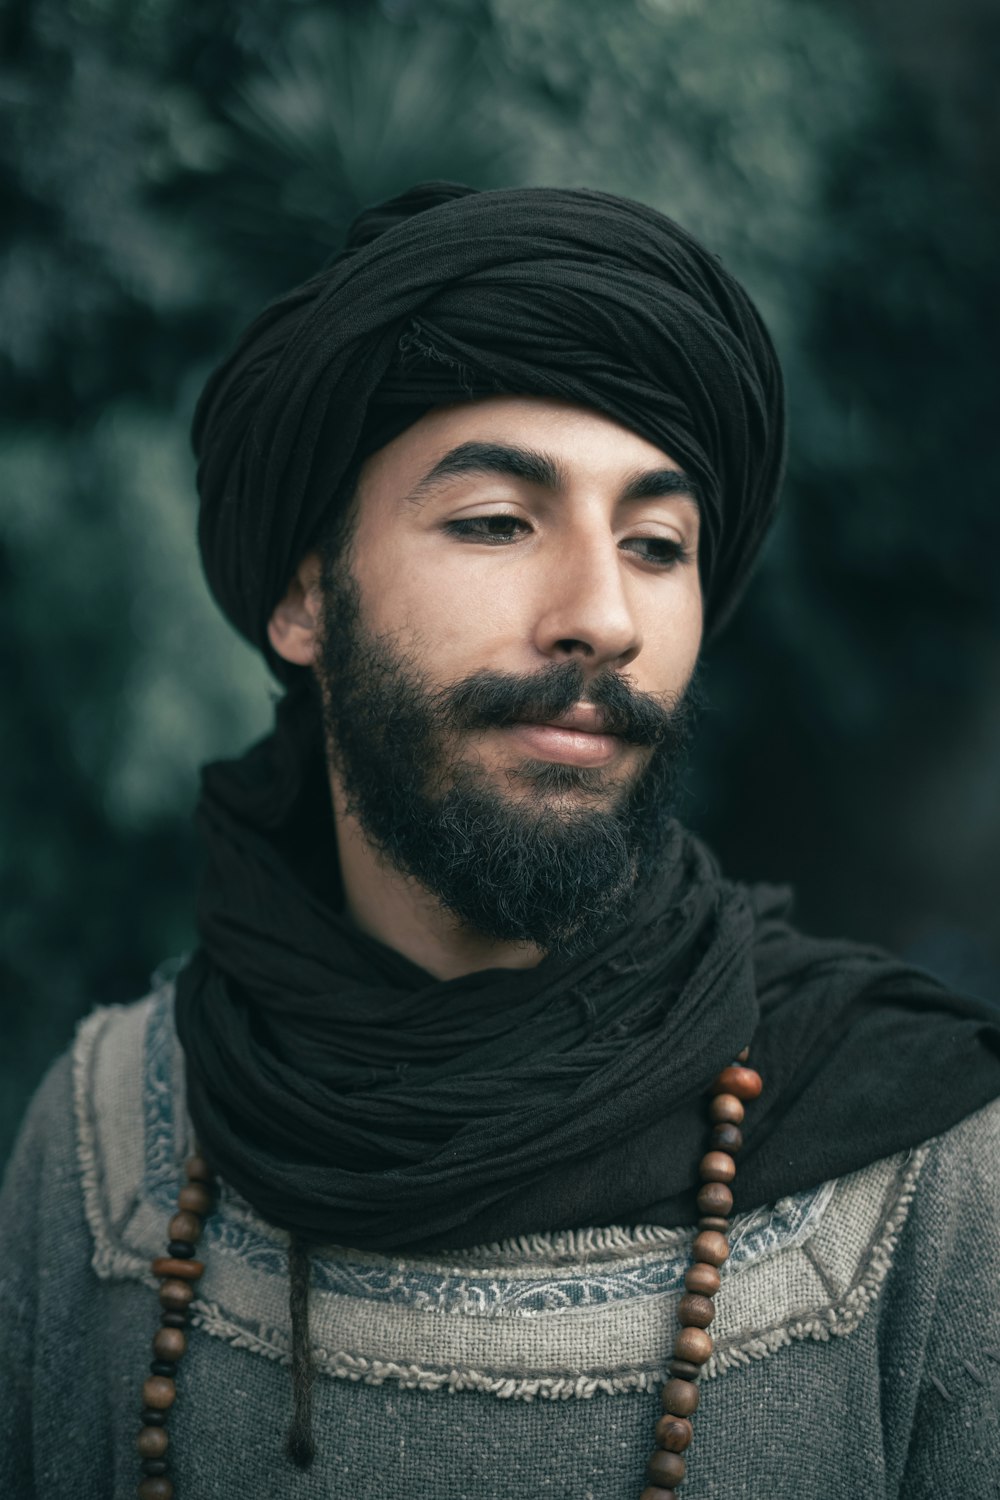 a man with a beard wearing a black turban